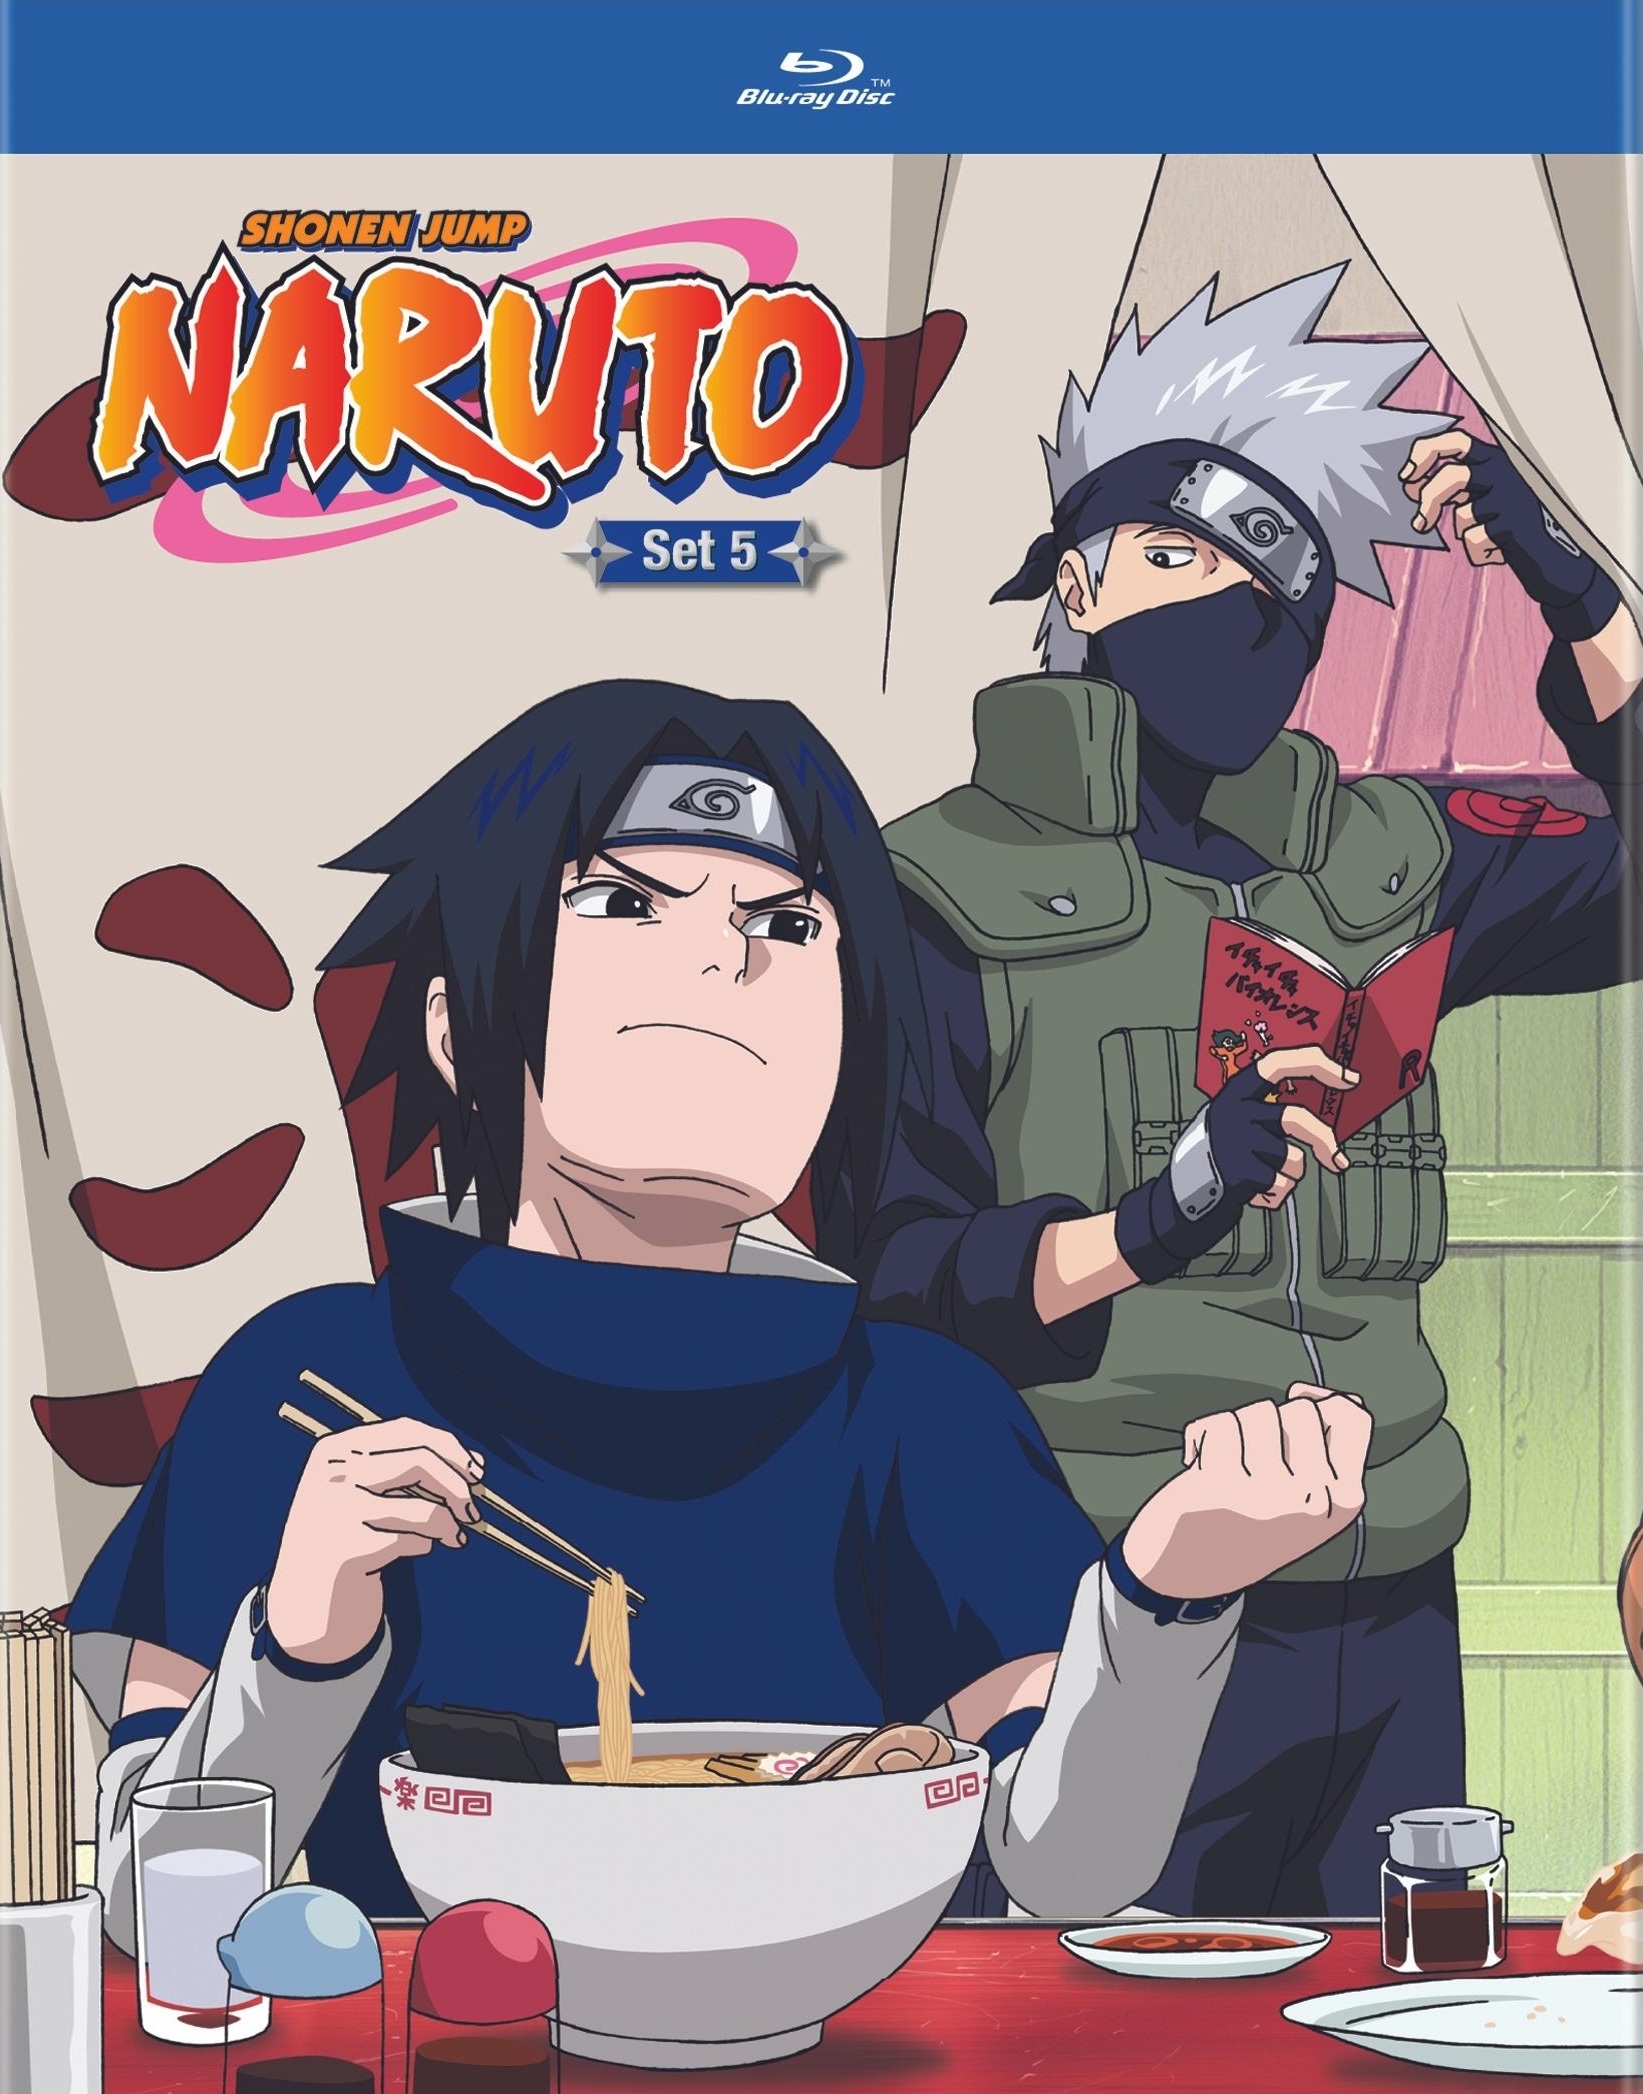 Boruto: Naruto Next Generations Set 4 [Blu-ray] [2 Discs] - Best Buy